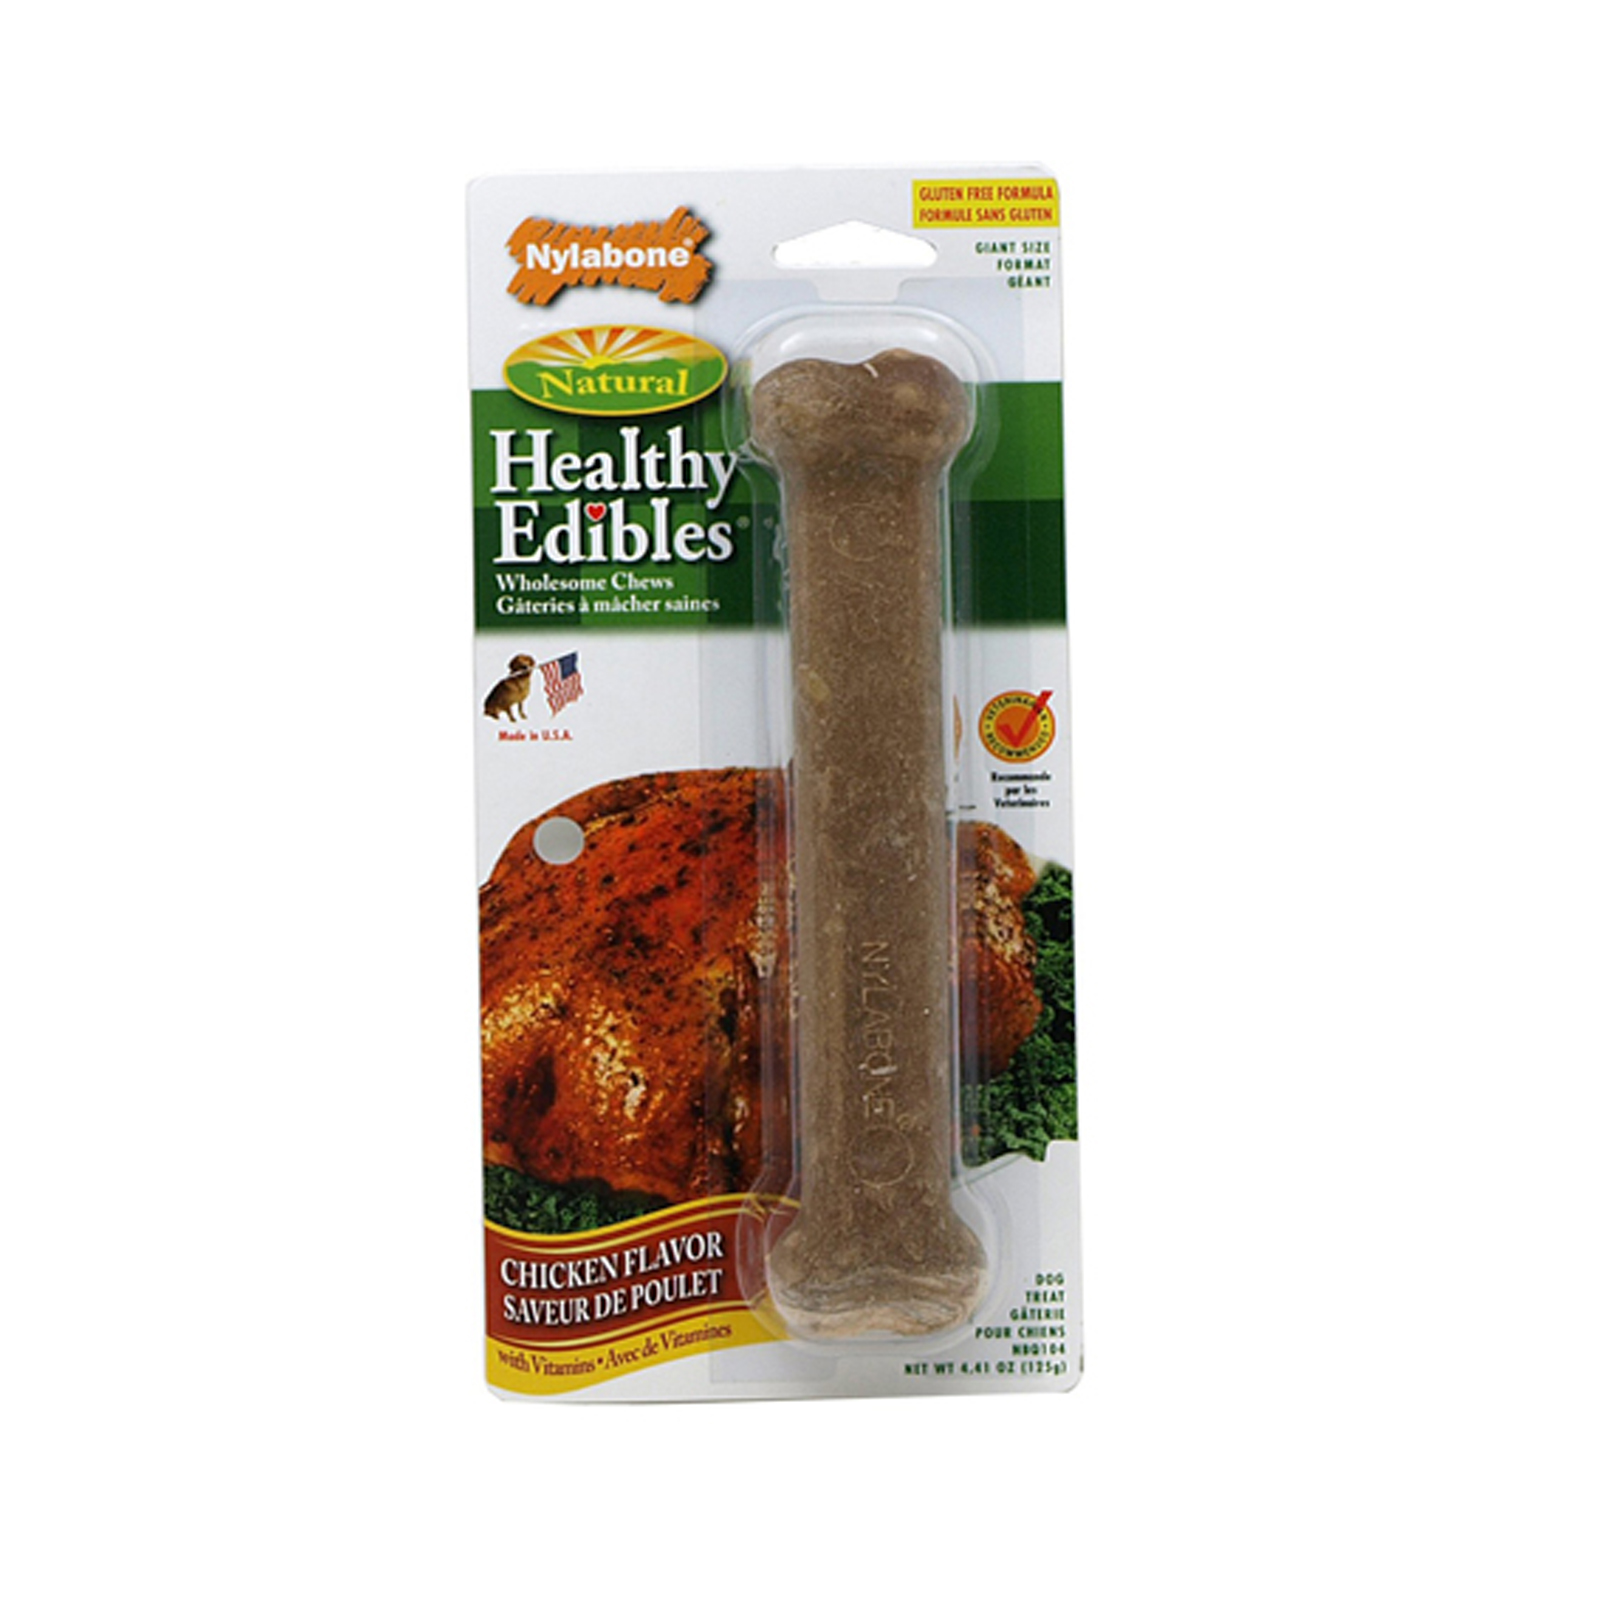 Tfh Publications Inc. Nylabone Edible Bbq Chicken Souper